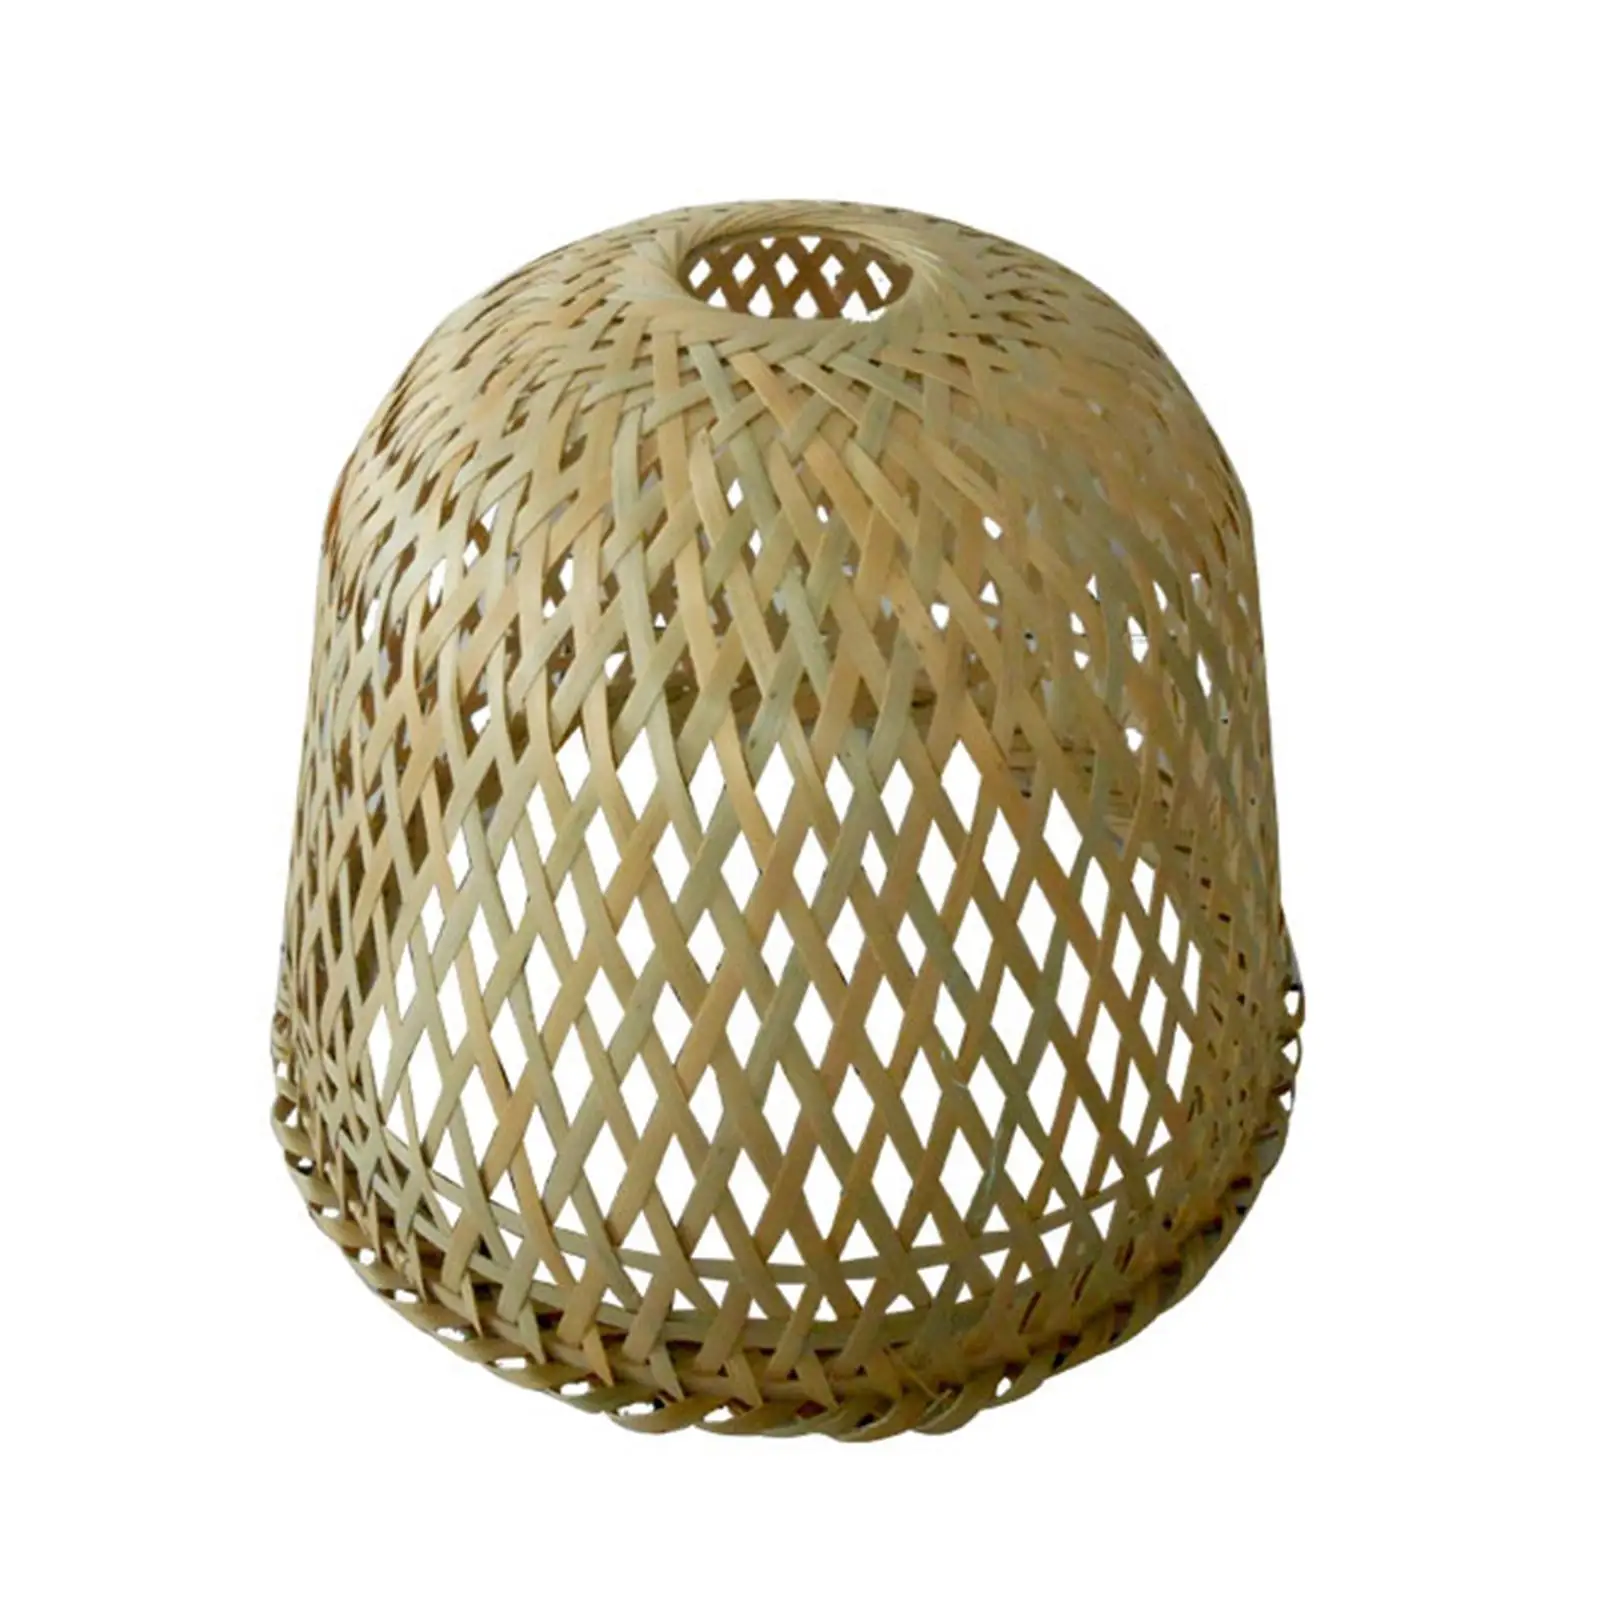 Bamboo Lamp Shade Ceiling Light Shade Fitting Handmade Weaving Lanterns Bulb Guard for Dining Room Restaurant Decorative